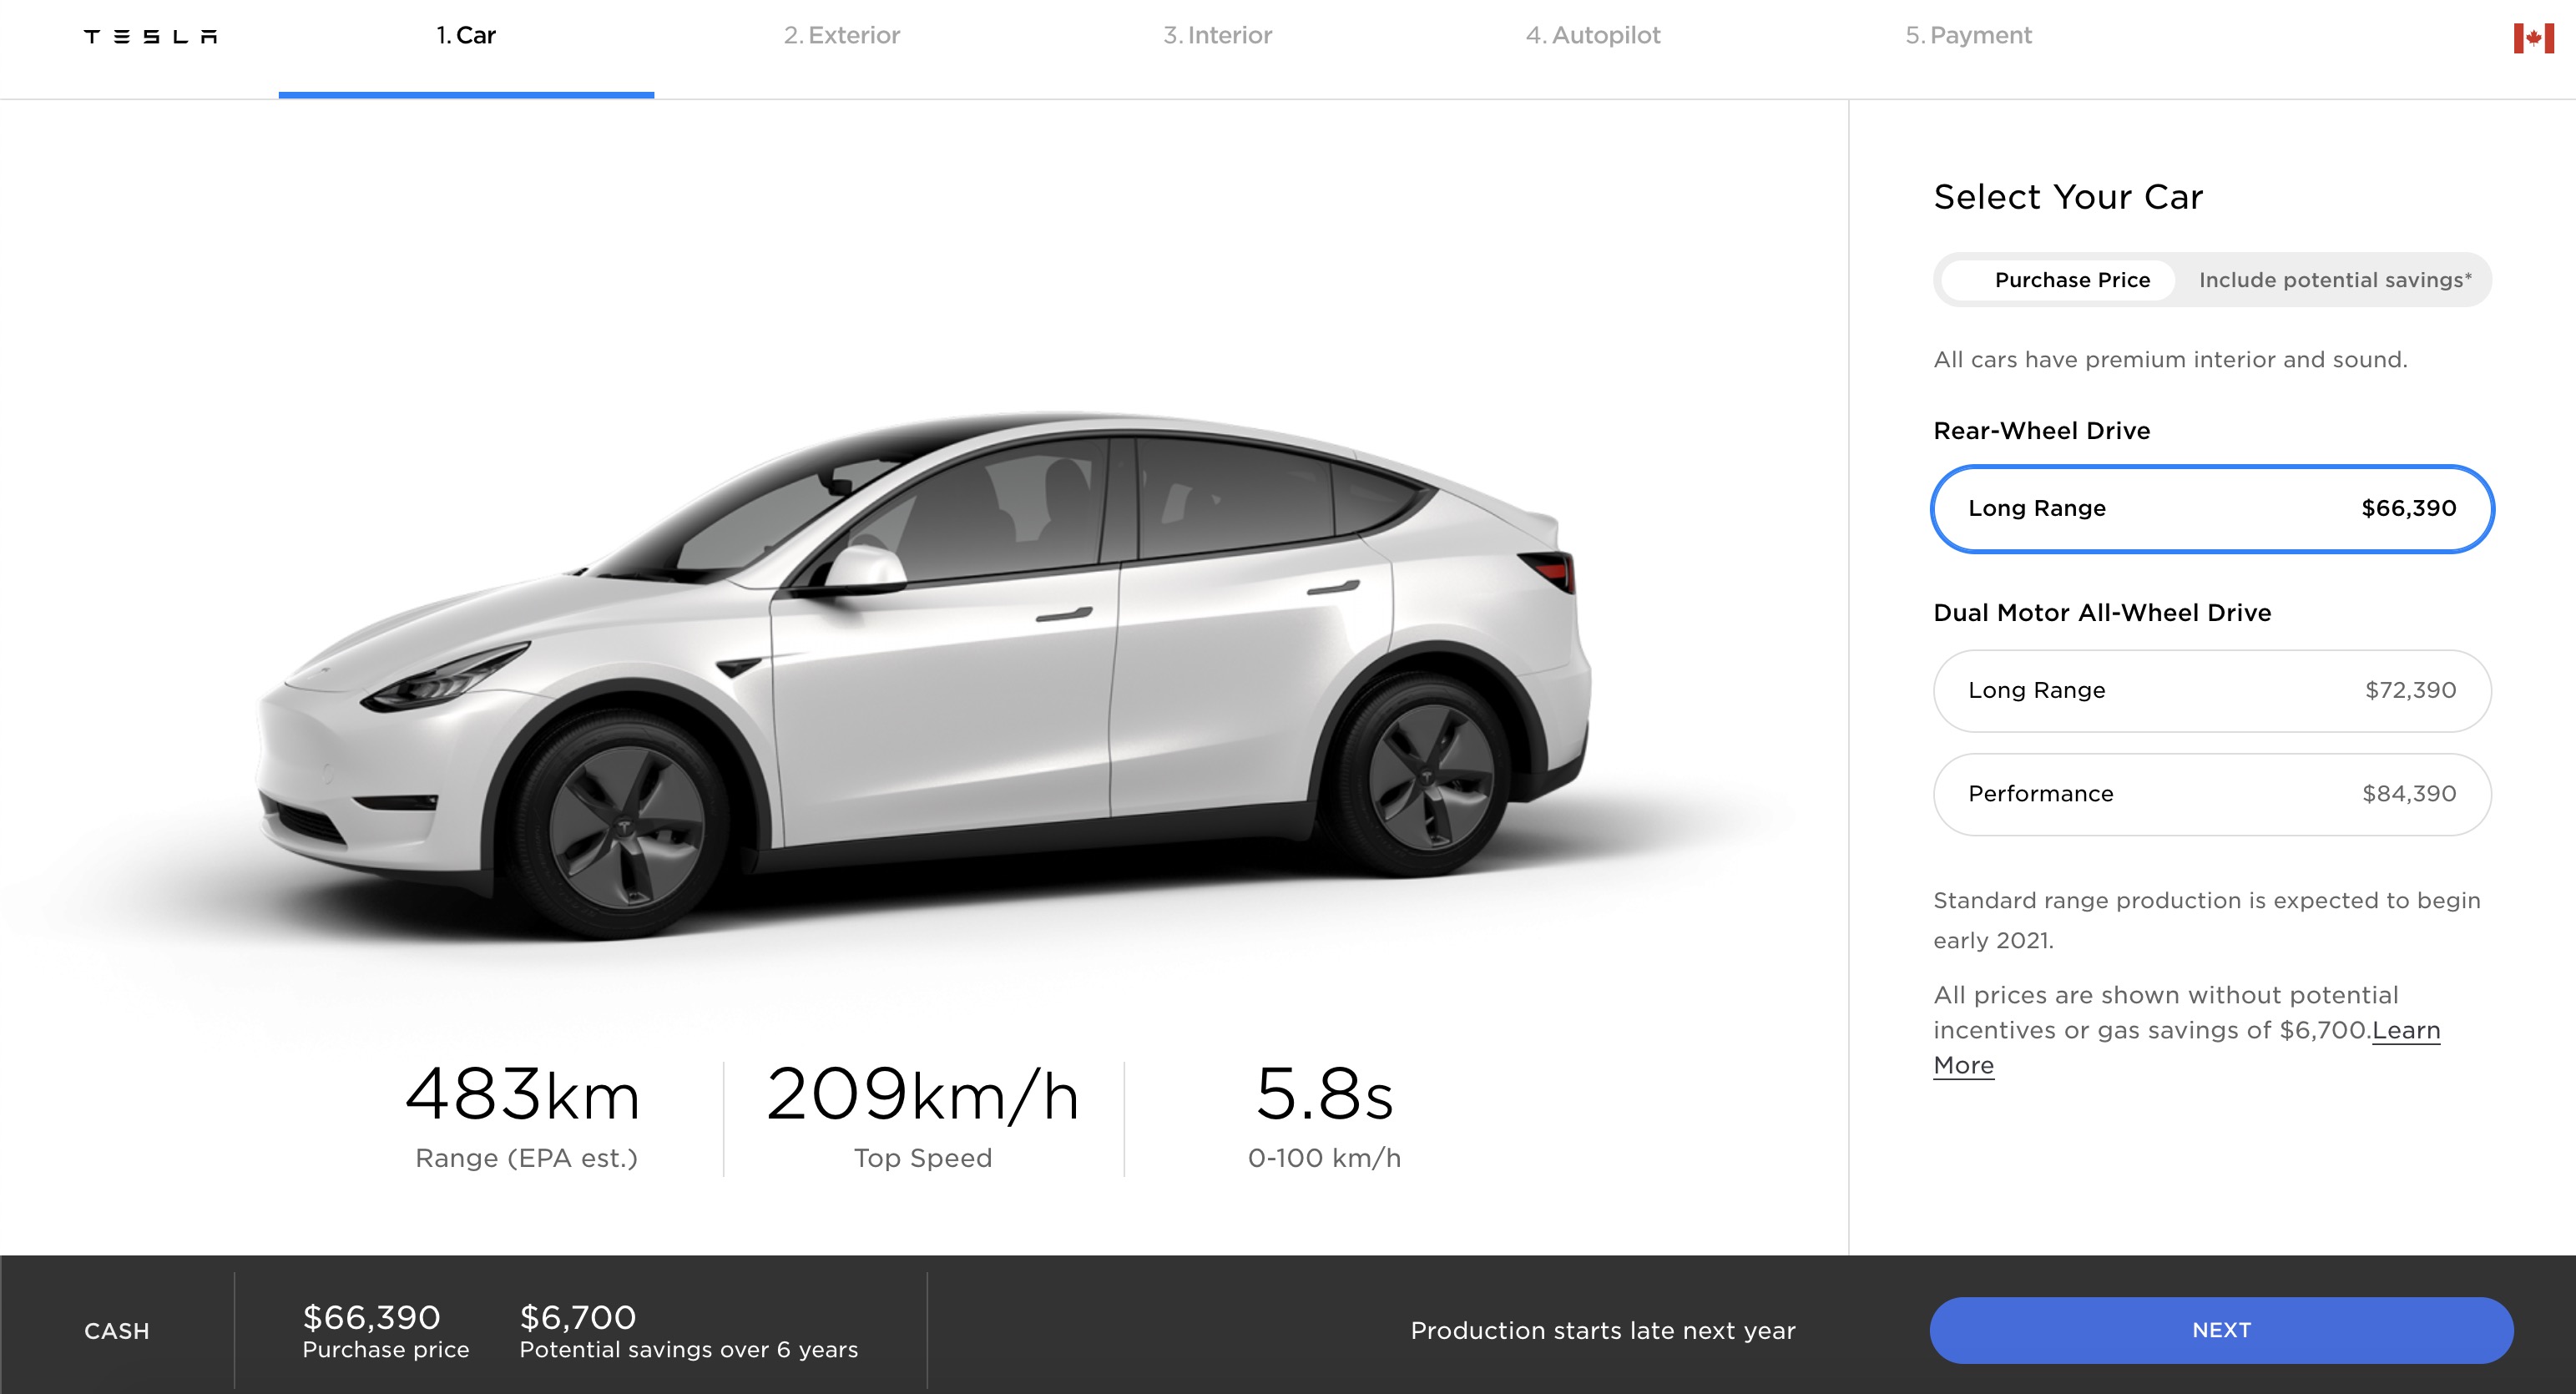 Tesla could focus Model Y deliveries in Canada to take advantage of